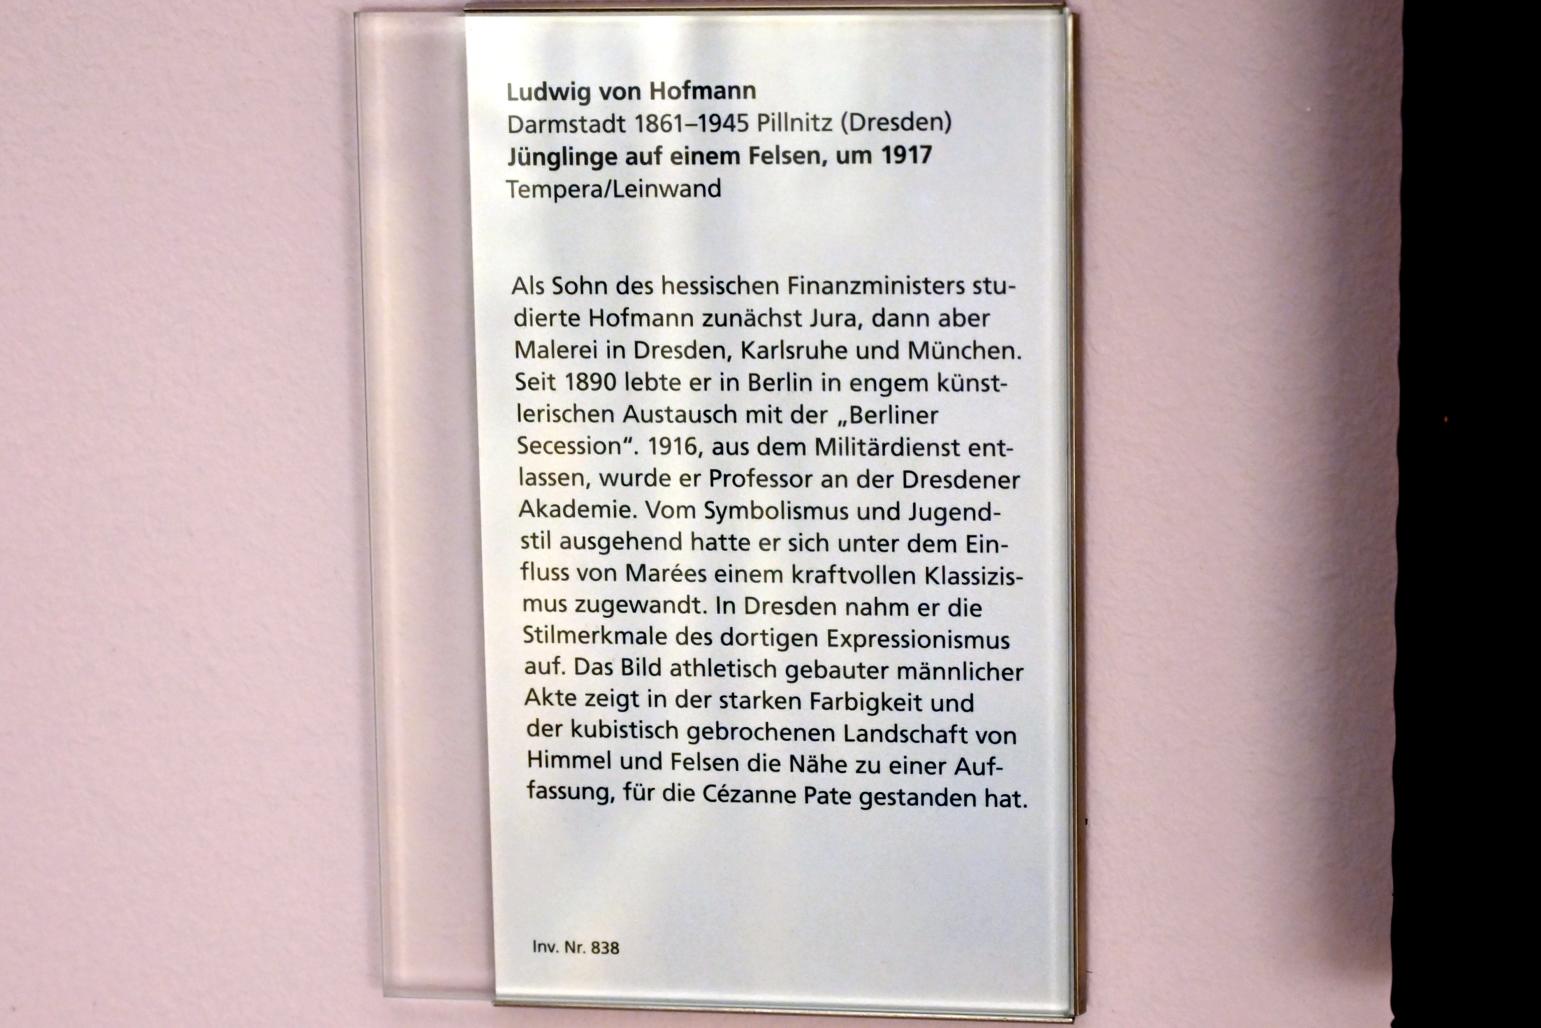 Ludwig von Hofmann (1889–1917), Jünglinge auf einem Felsen, Mainz, Landesmuseum, Jugendstil, um 1917, Bild 2/2